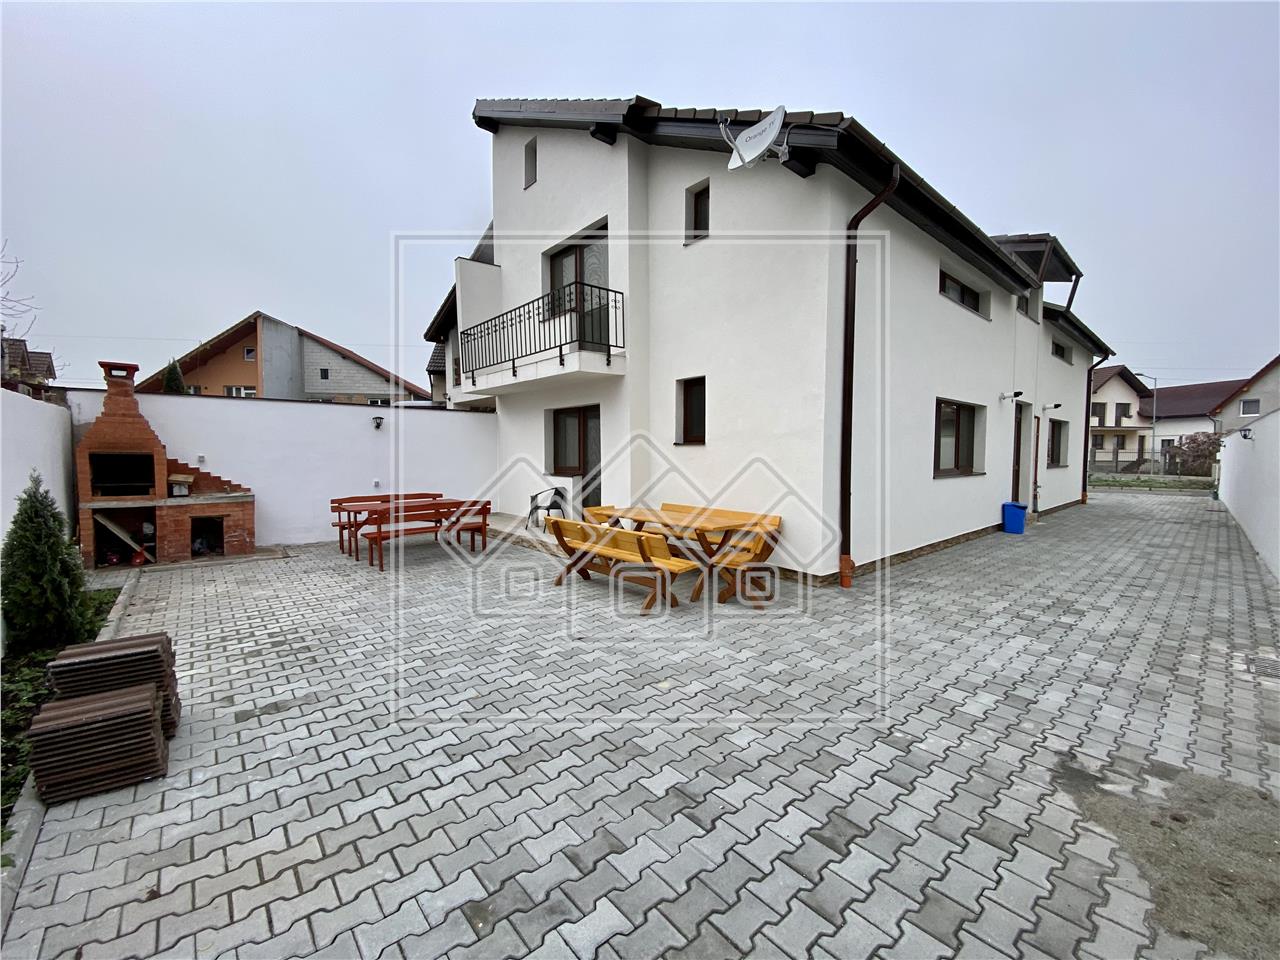 Pension for sale in Sibiu - 4 apartments - Terezian area